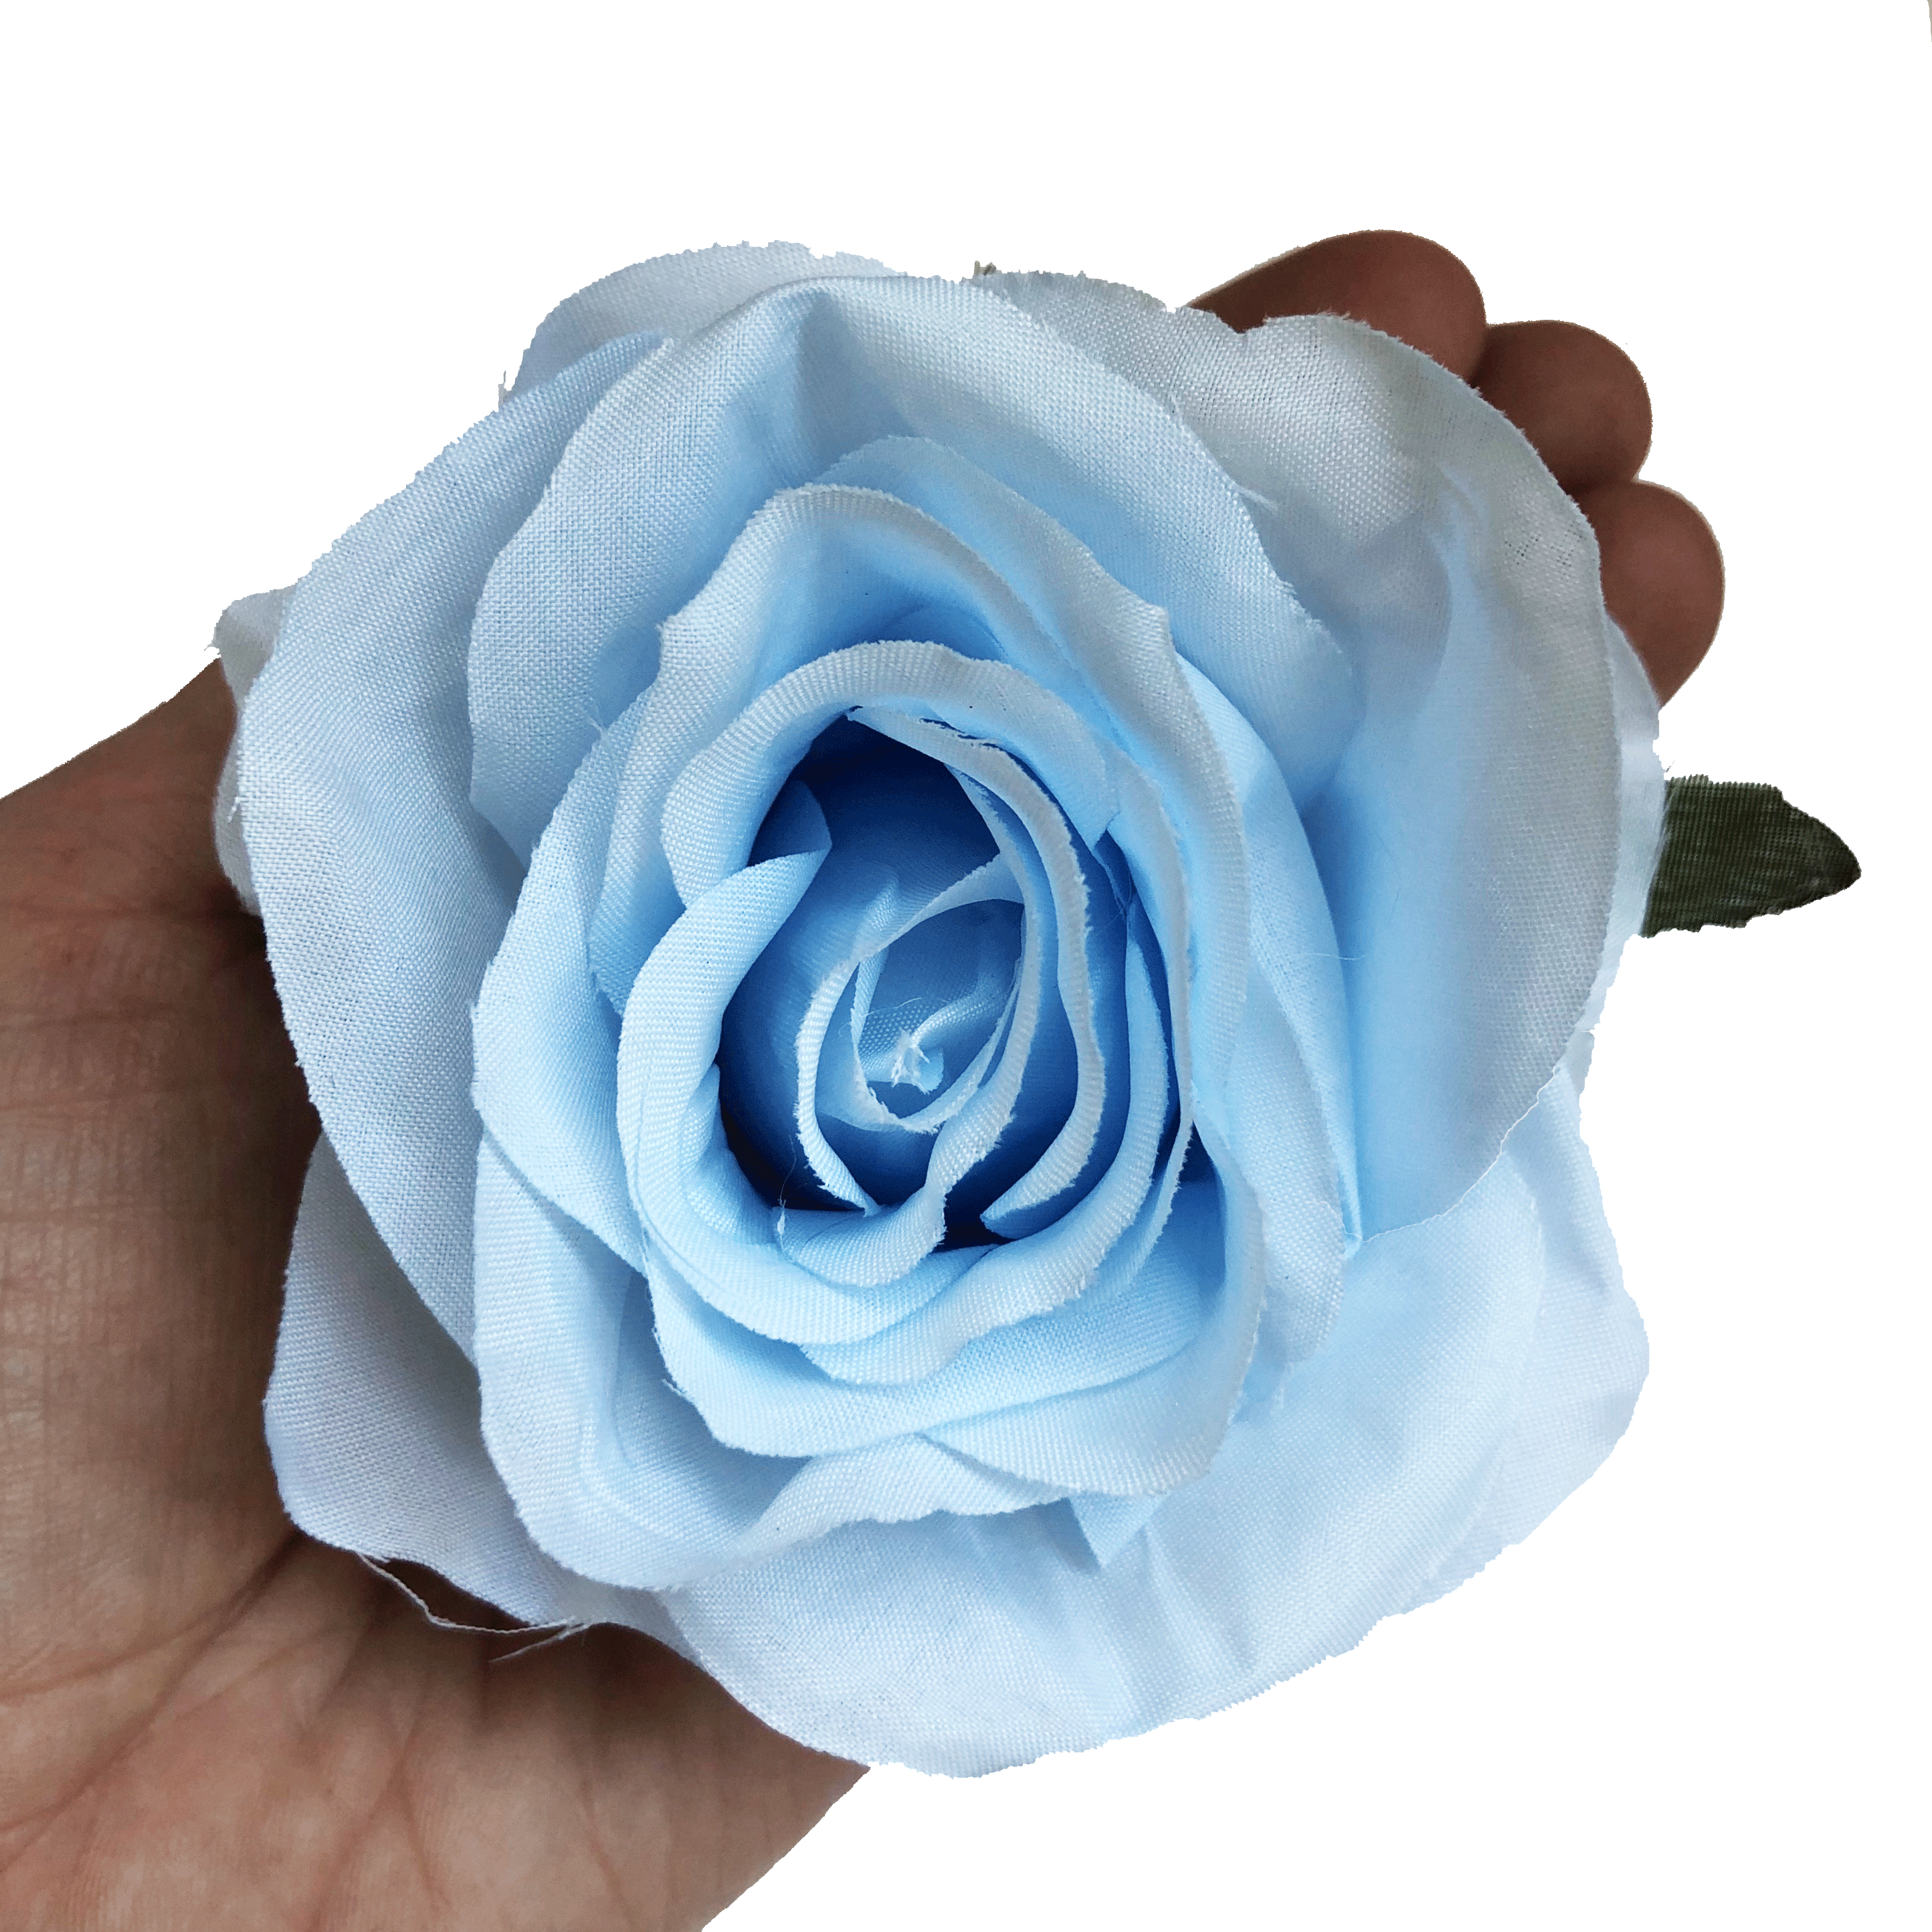 Artificial Silk Flower Head - Light Blue Rose Style 16 - 1pc